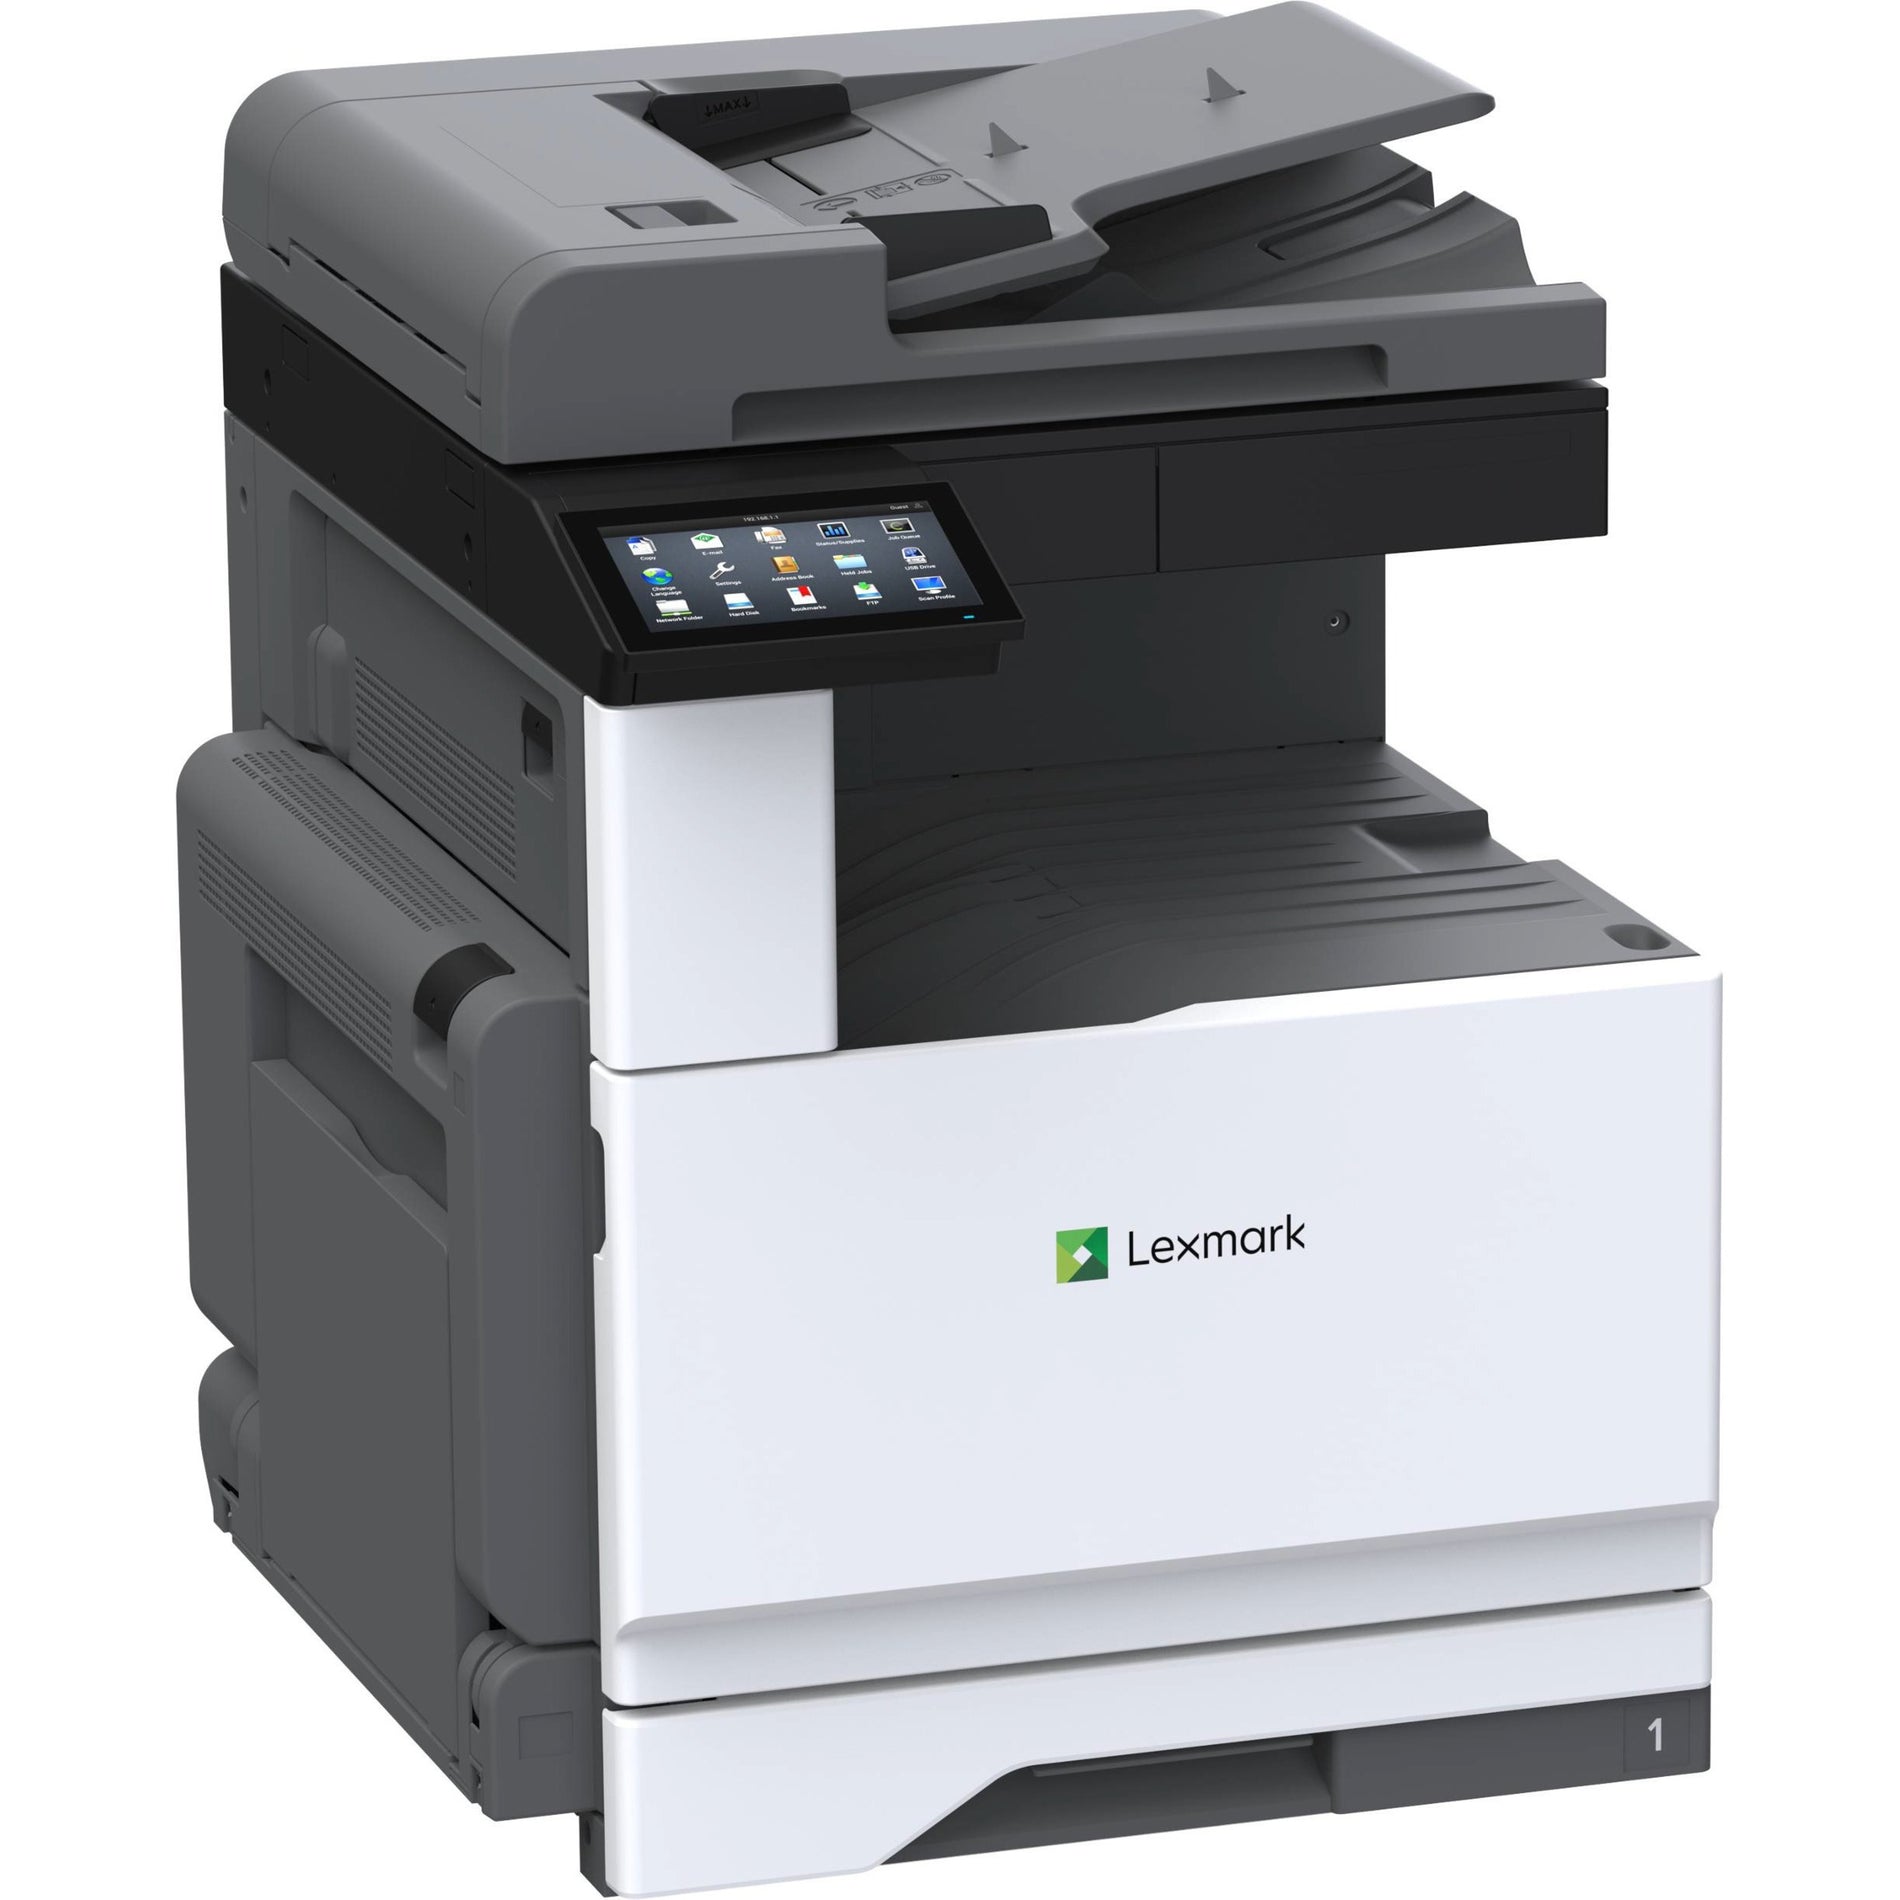 Lexmark 32D0200 CX931dse Multifunction Color Laser Printer, Automatic Duplex Printing, 35 ppm, 1200 x 1200 dpi